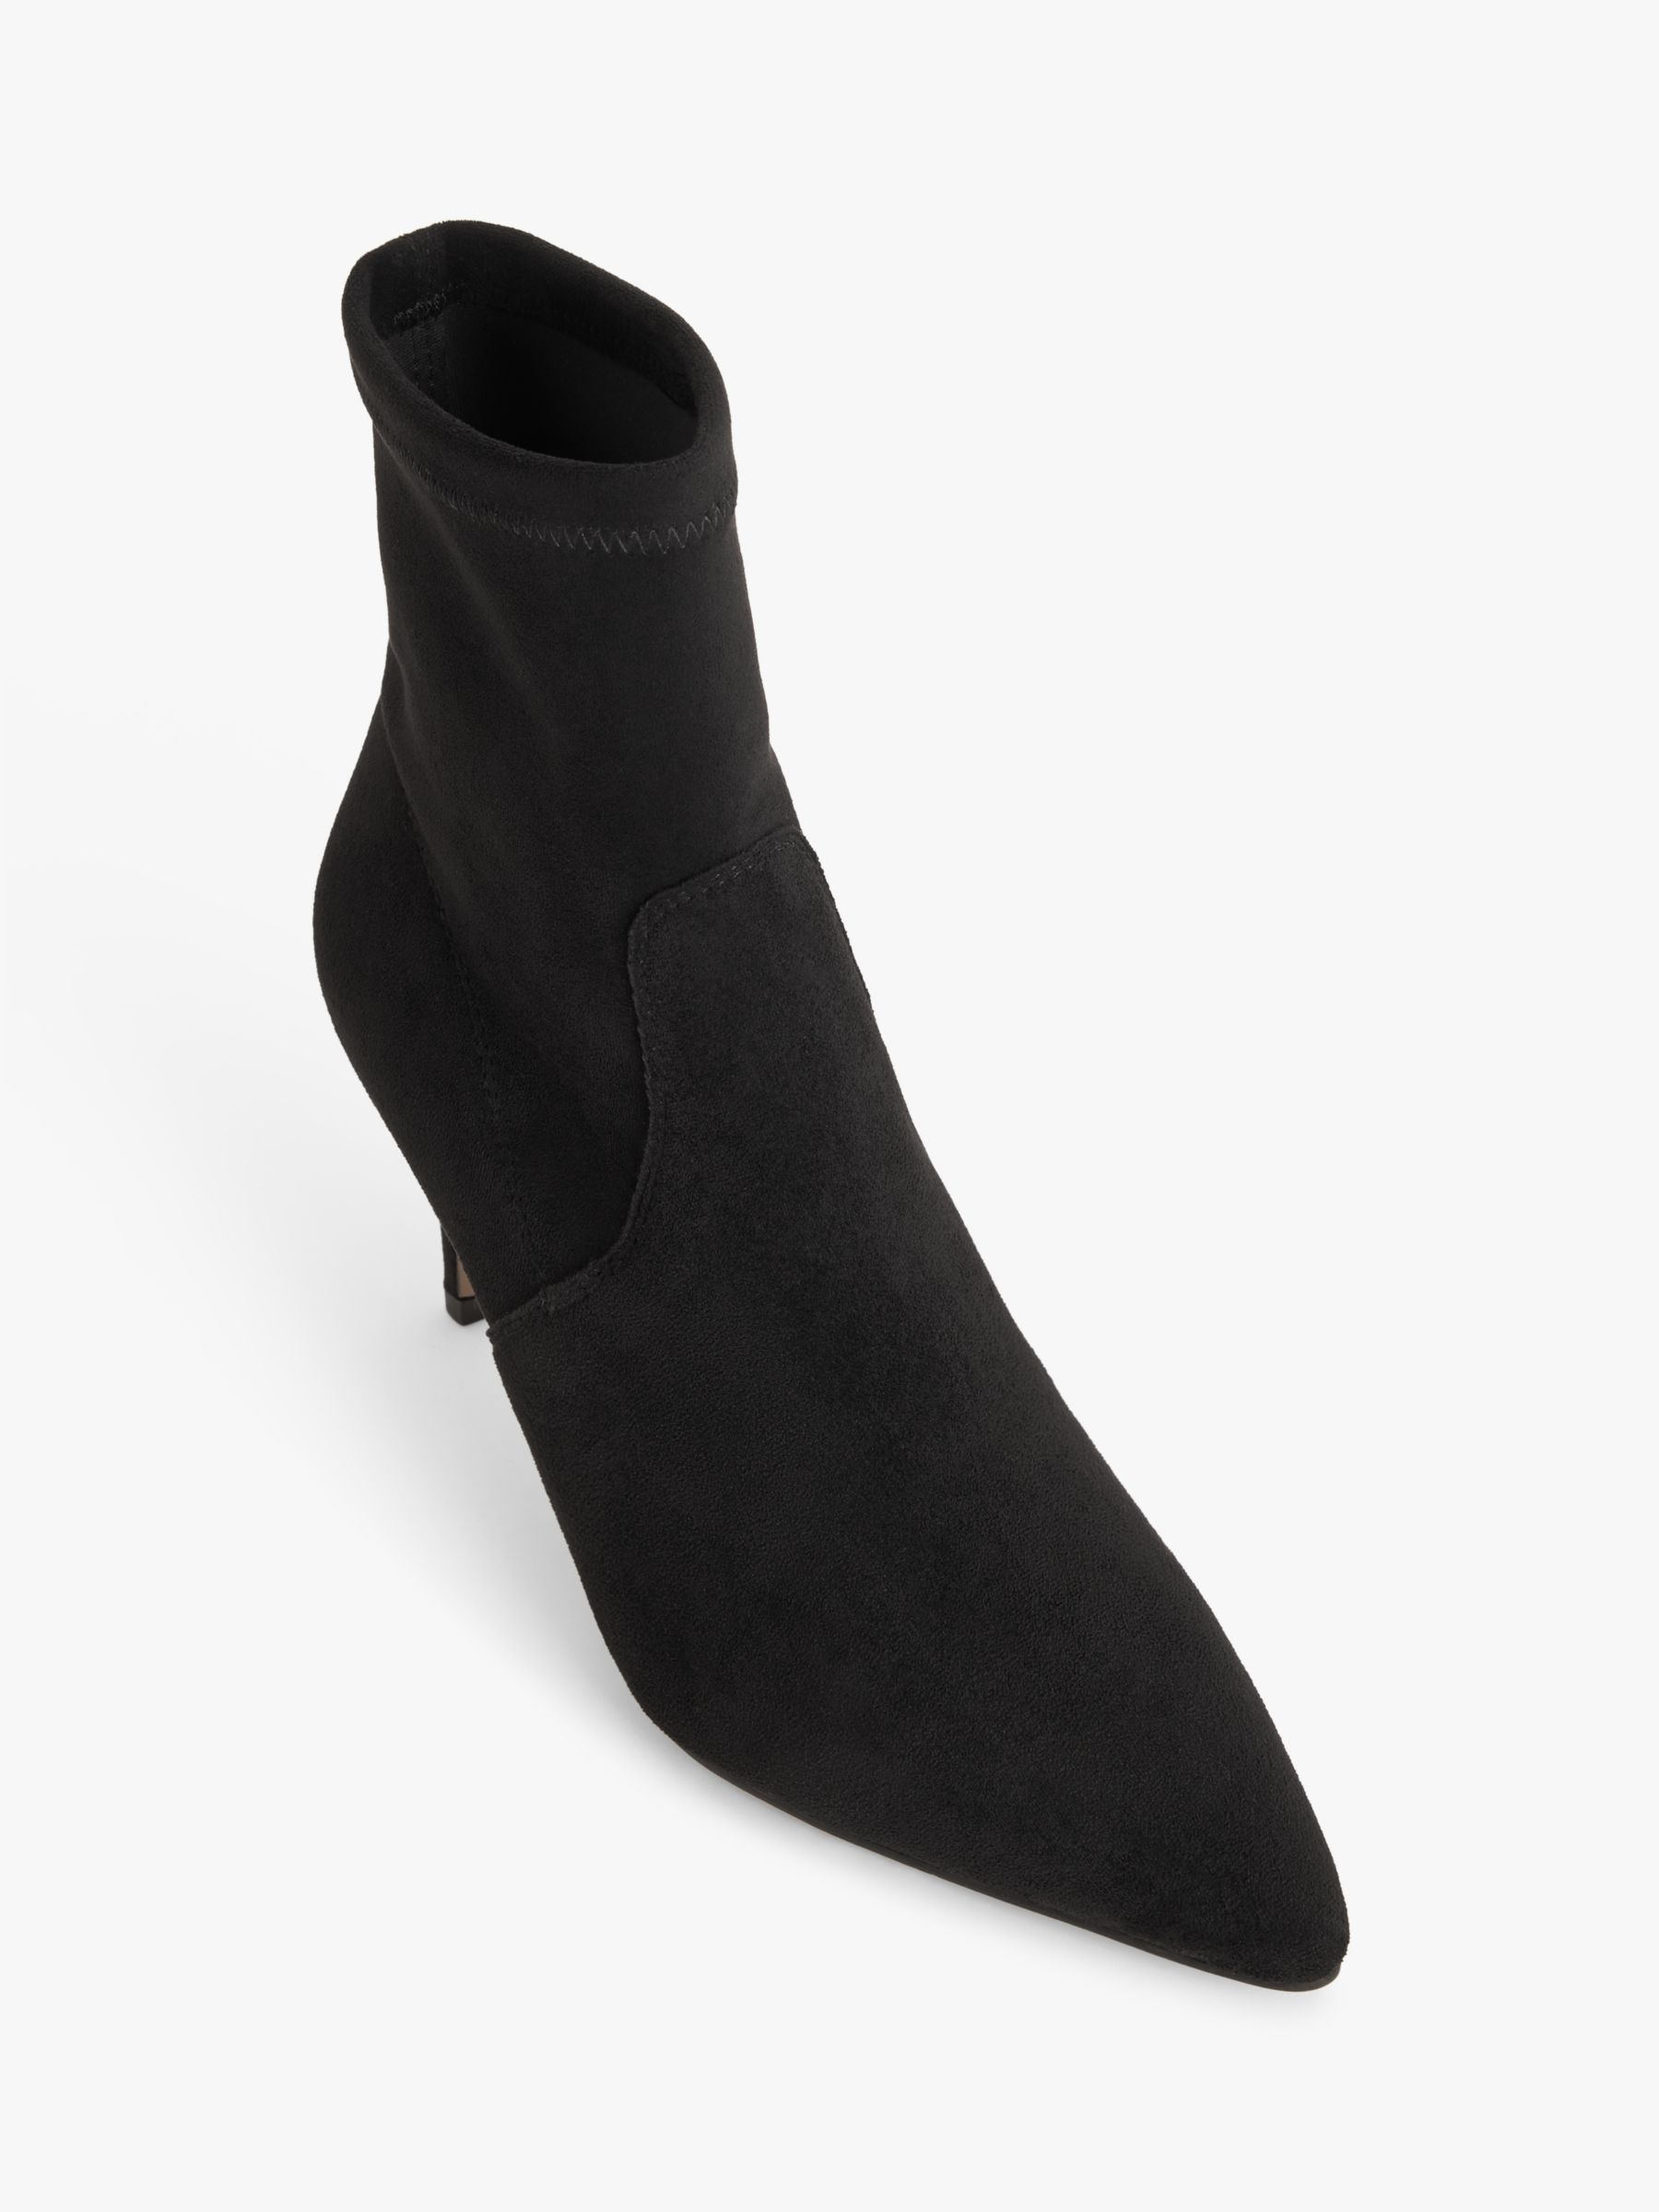 John Lewis Olivia Microfibre Stretch Stiletto Heel Ankle Boots, Black, 6